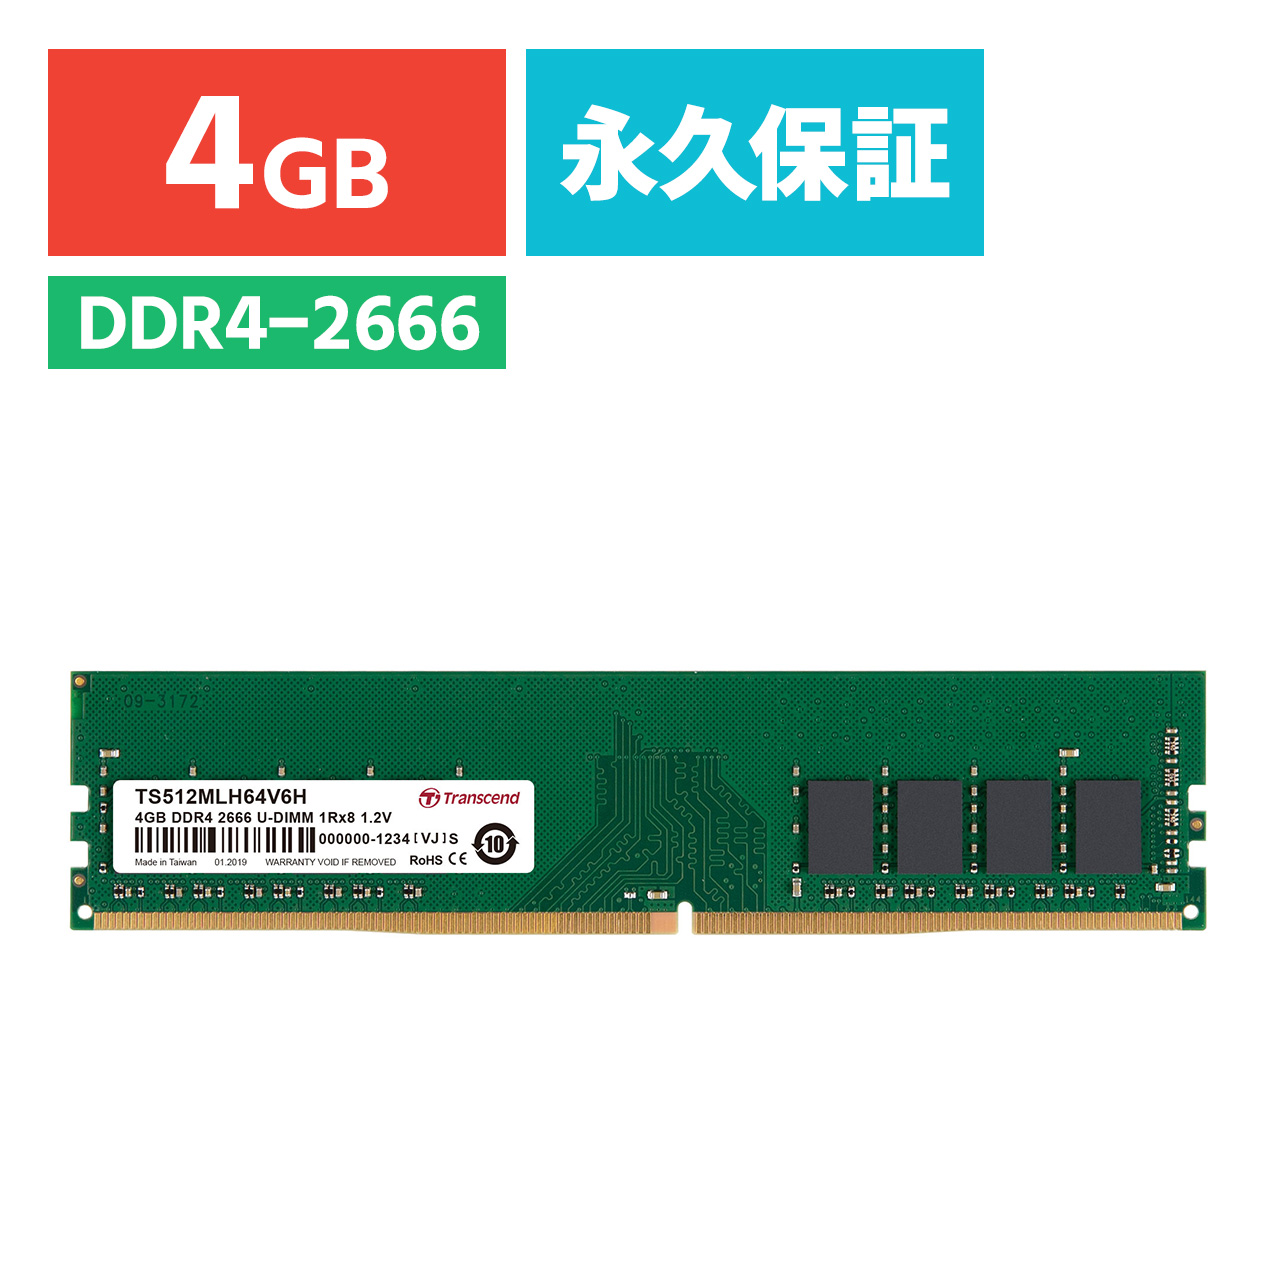 Transcend 増設メモリ 4GB DDR4-2666 PC4-21300 U-DIMM TS512MLH64V6H 